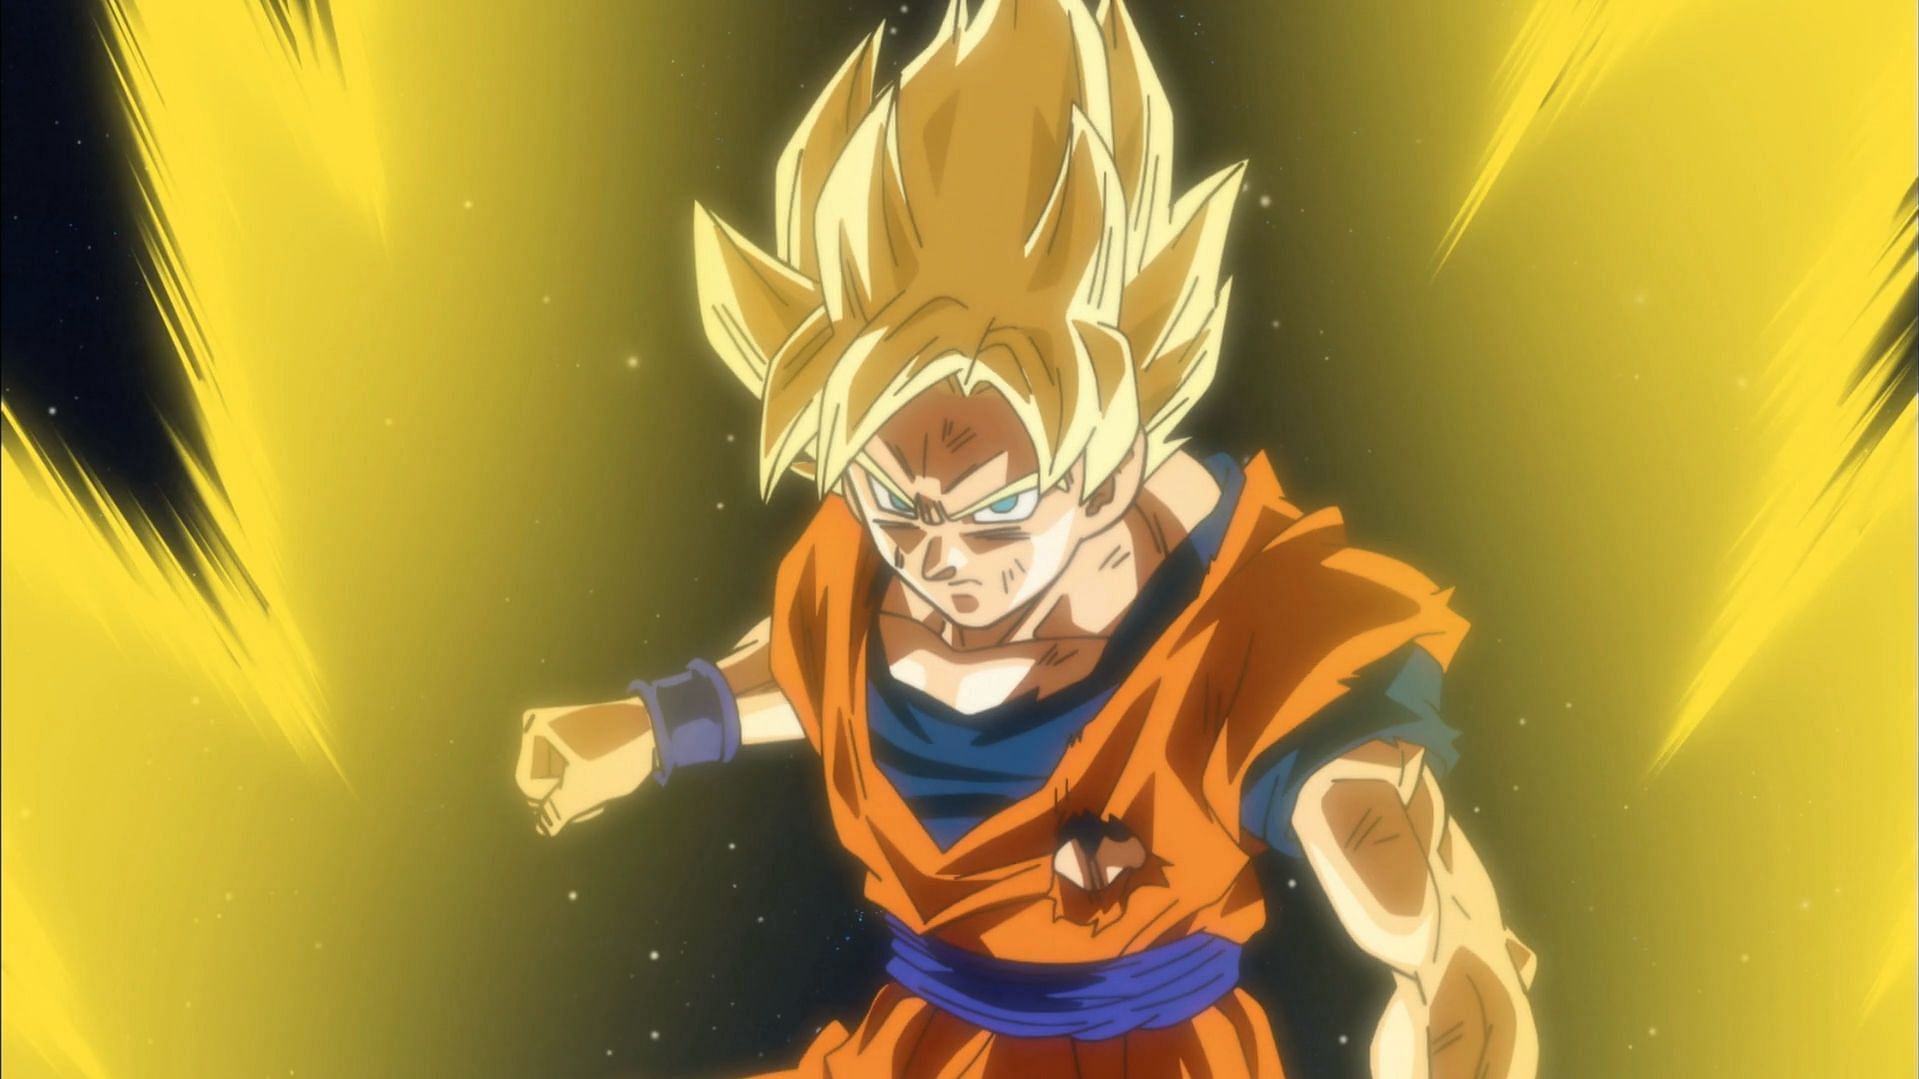 Goku in Super Saiyan form (Image via Toei Animation)